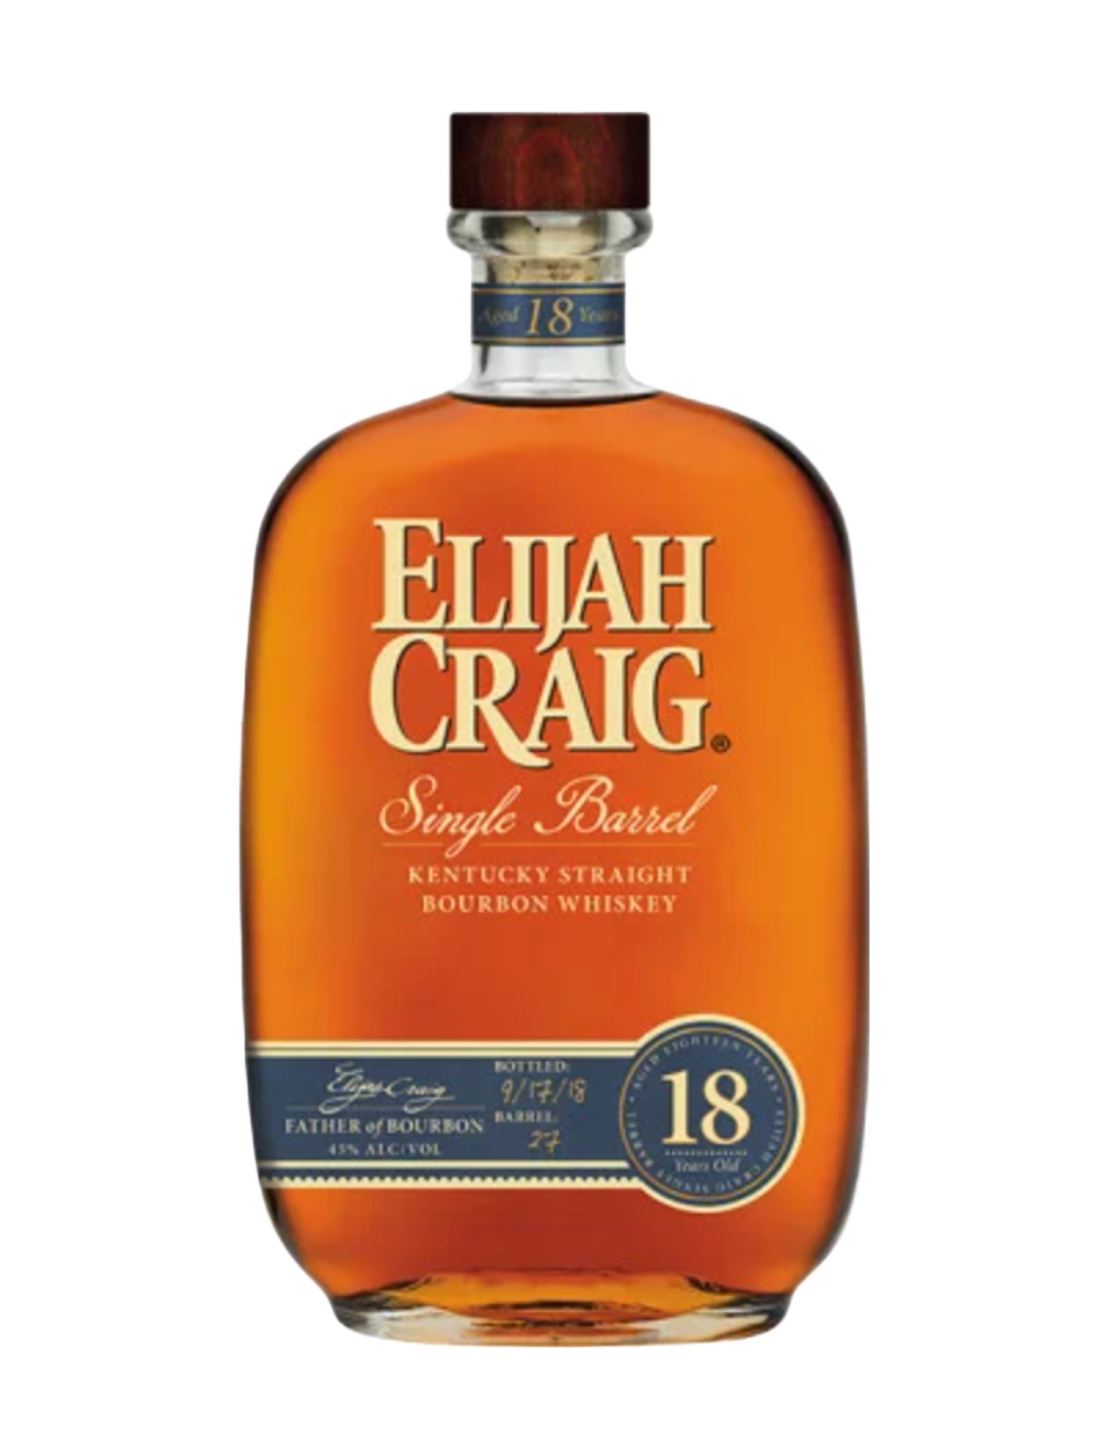 An elegant bottle of Elijah Craig 18-Year Old Single Barrel Bourbon in front of a plain white background